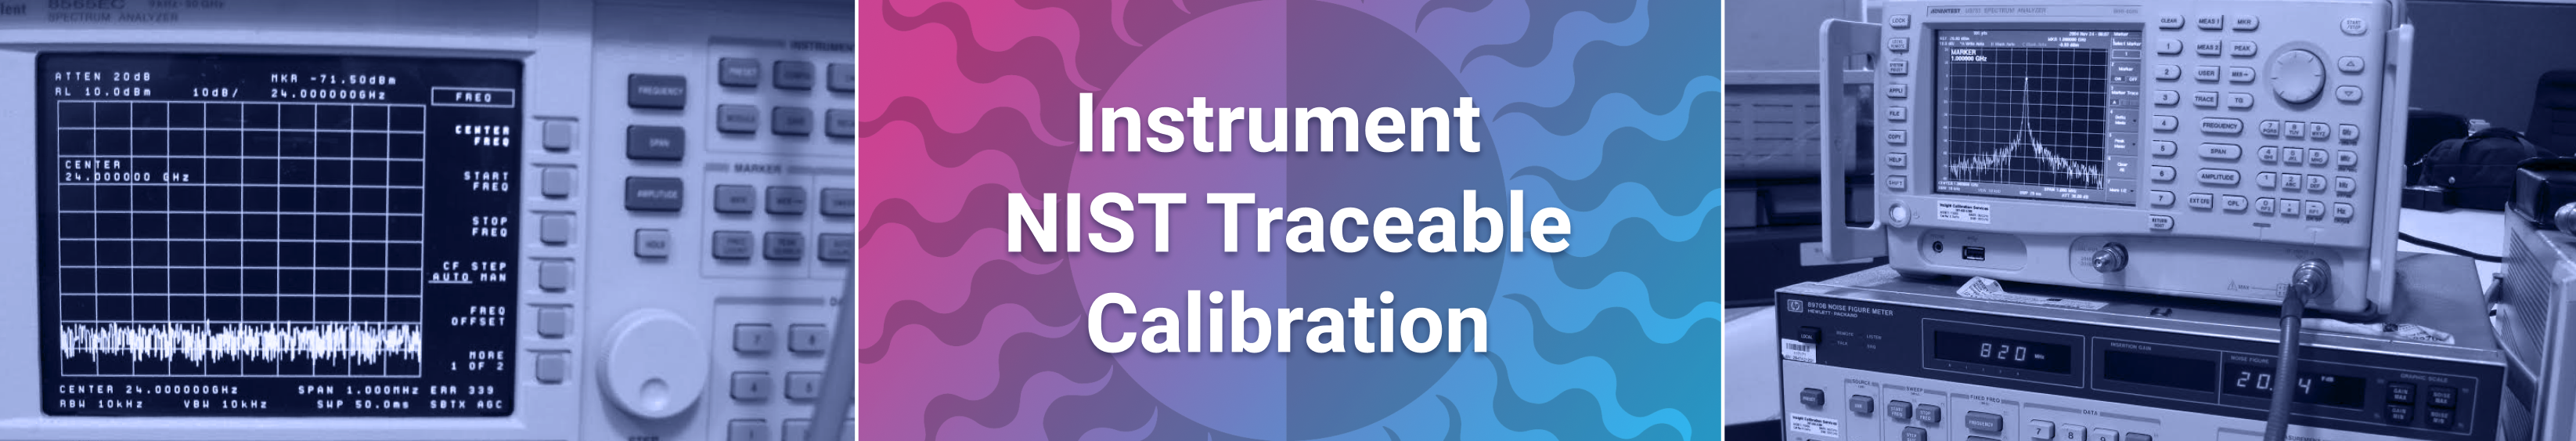 Instrument NIST Traceable Calibration Banner